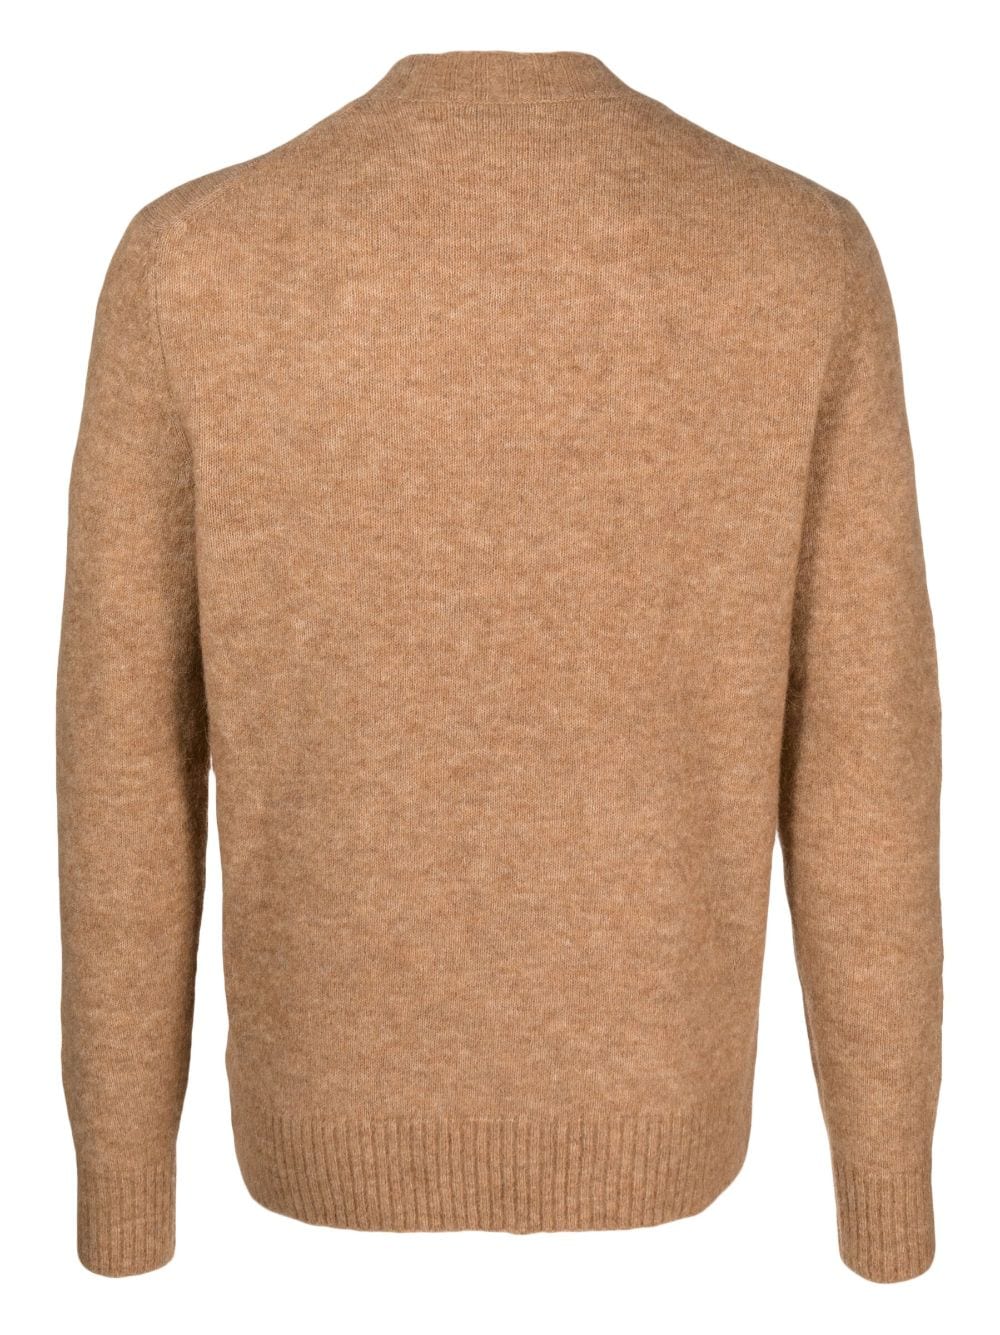 Shop Ballantyne Alpaca Wool Round Neck Pullover